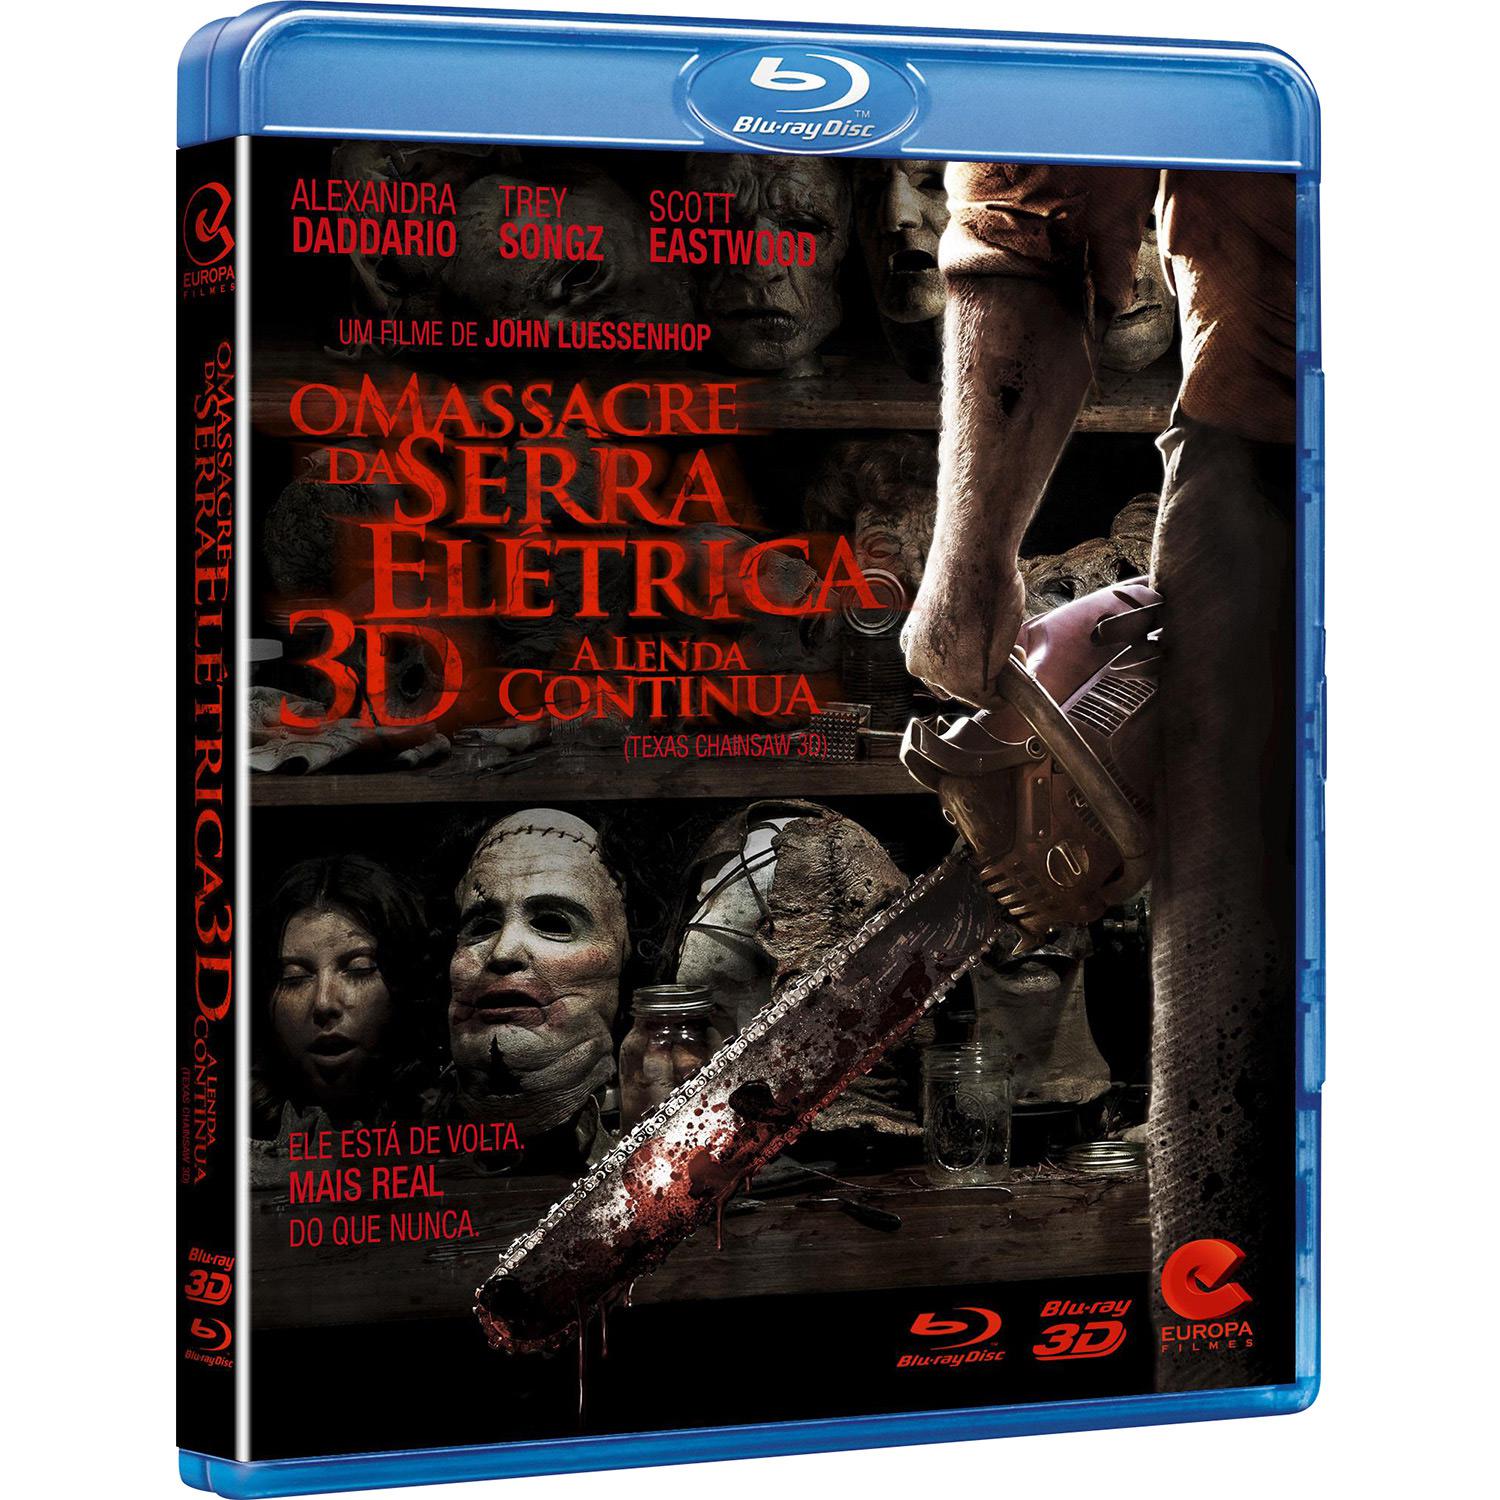 Blu-Ray 3D - O Massacre da Serra Elétrica - A Lenda Continua (Blu-Ray + Blu-Ray 3D) é bom? Vale a pena?